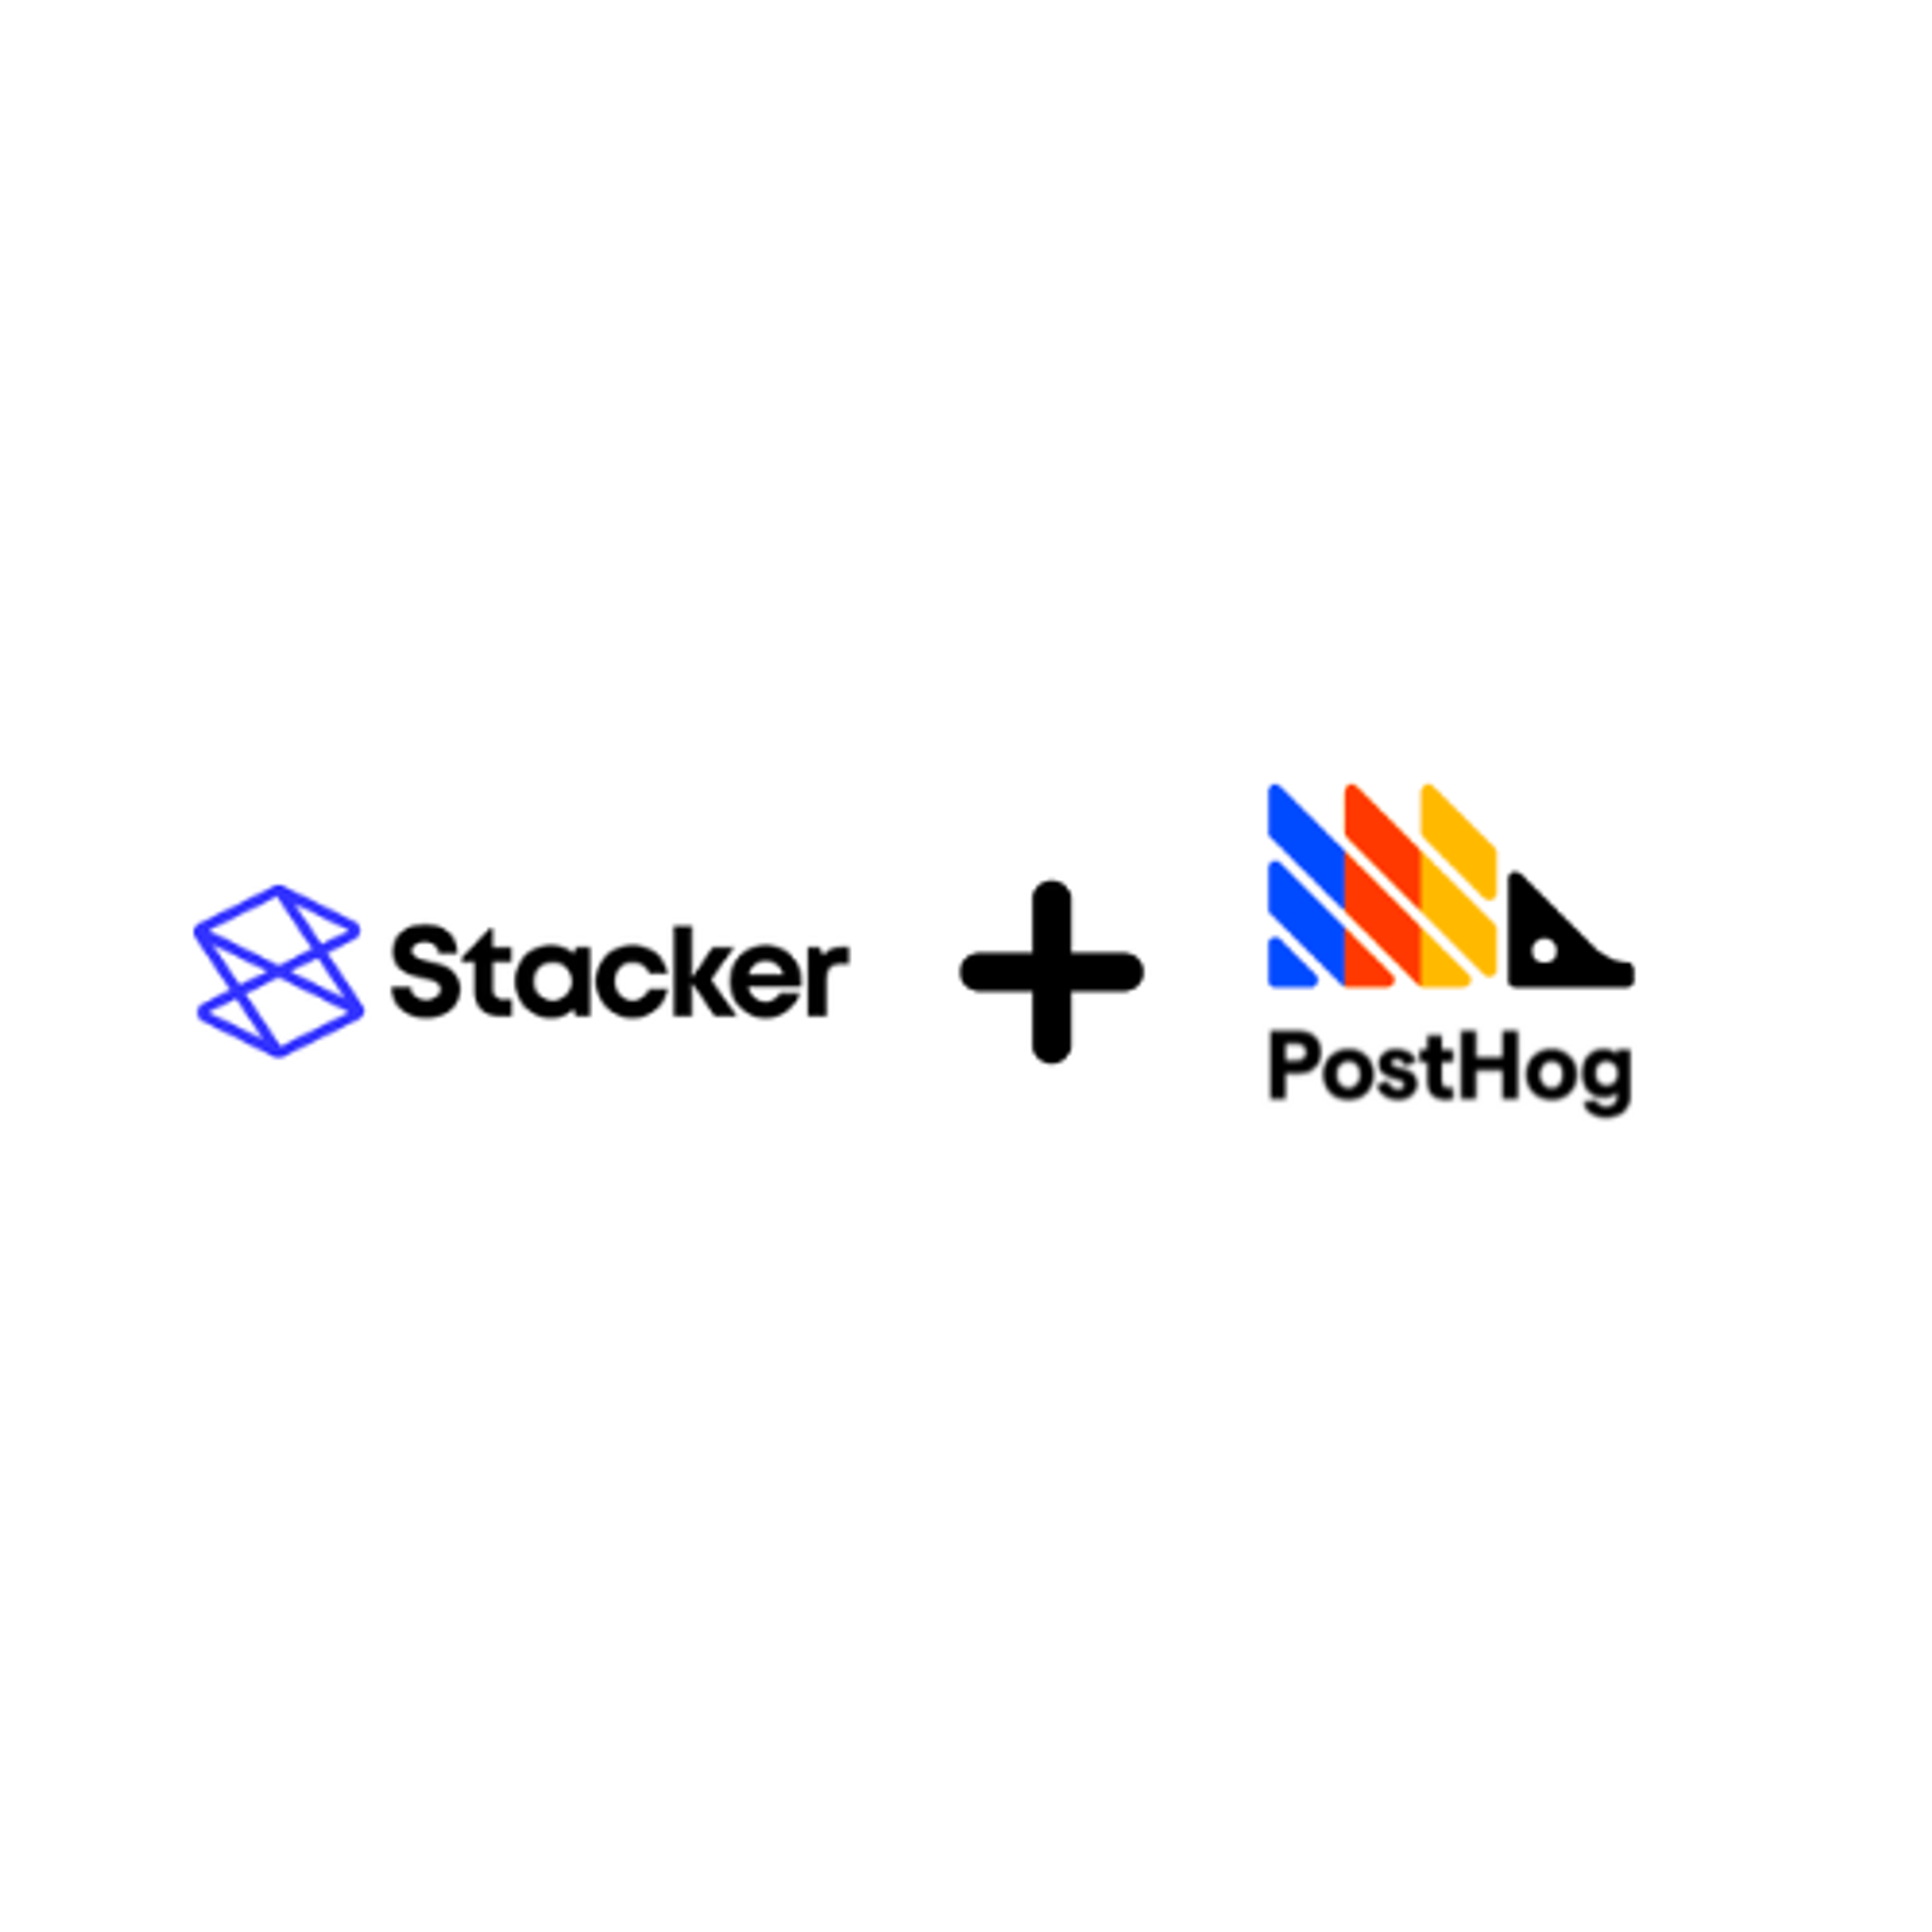 Stacker essentials analytics using PostHog